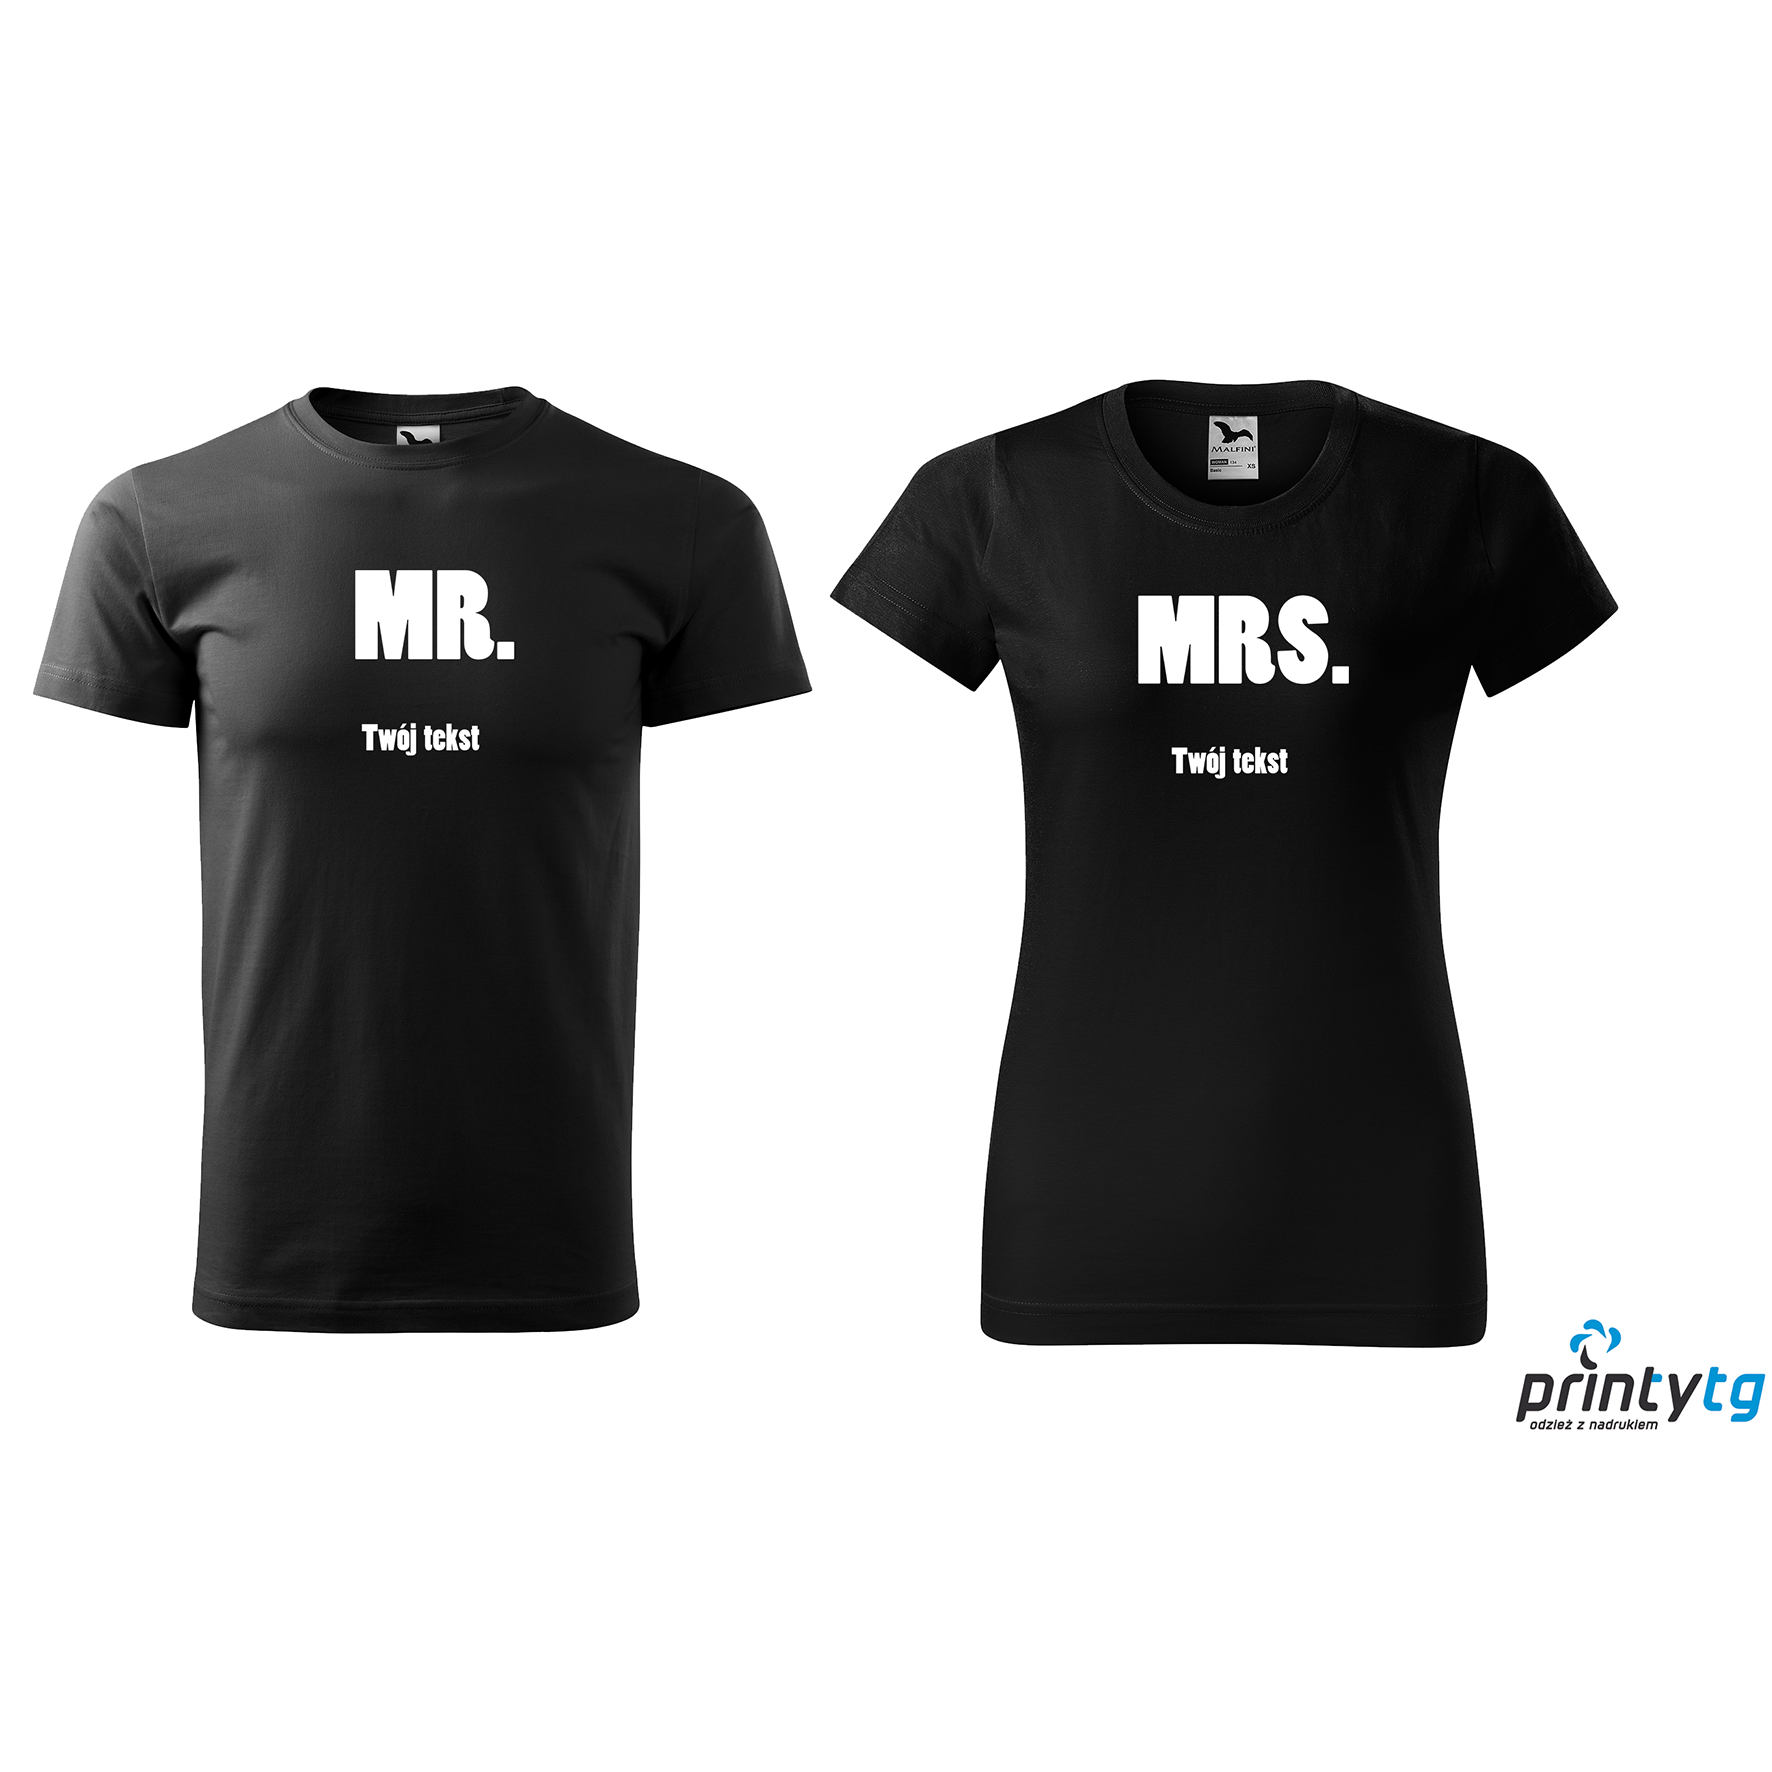 Zestaw dla dwojga – Koszulki z Twoim tekstem 2 szt. – Mrs & Mr